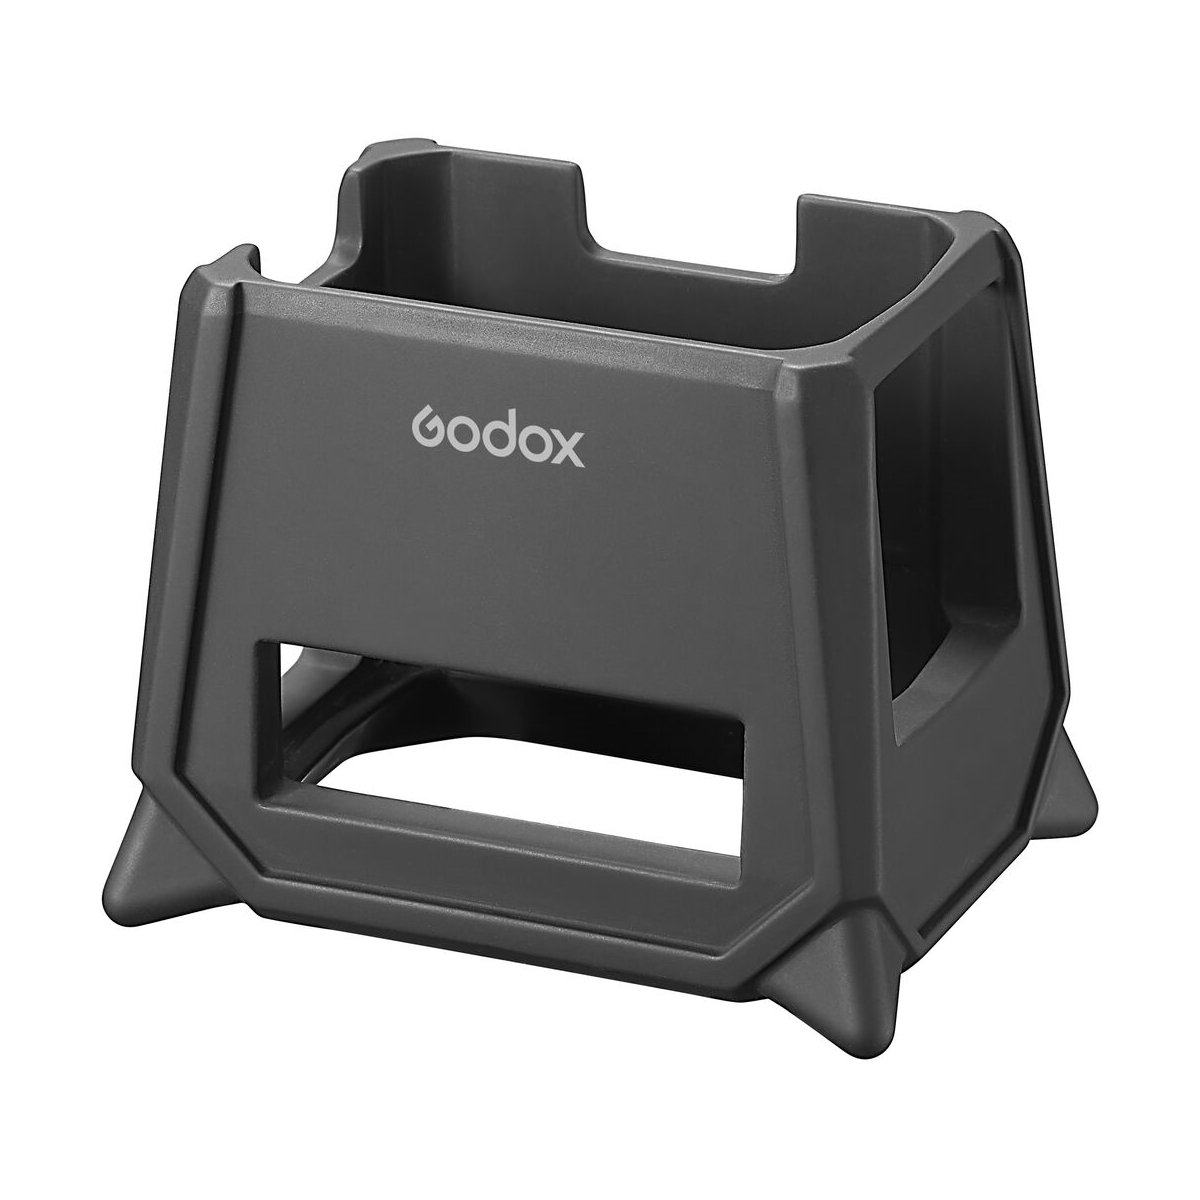    Godox AD200Pro-PC  AD200Pro   Ultra-mart